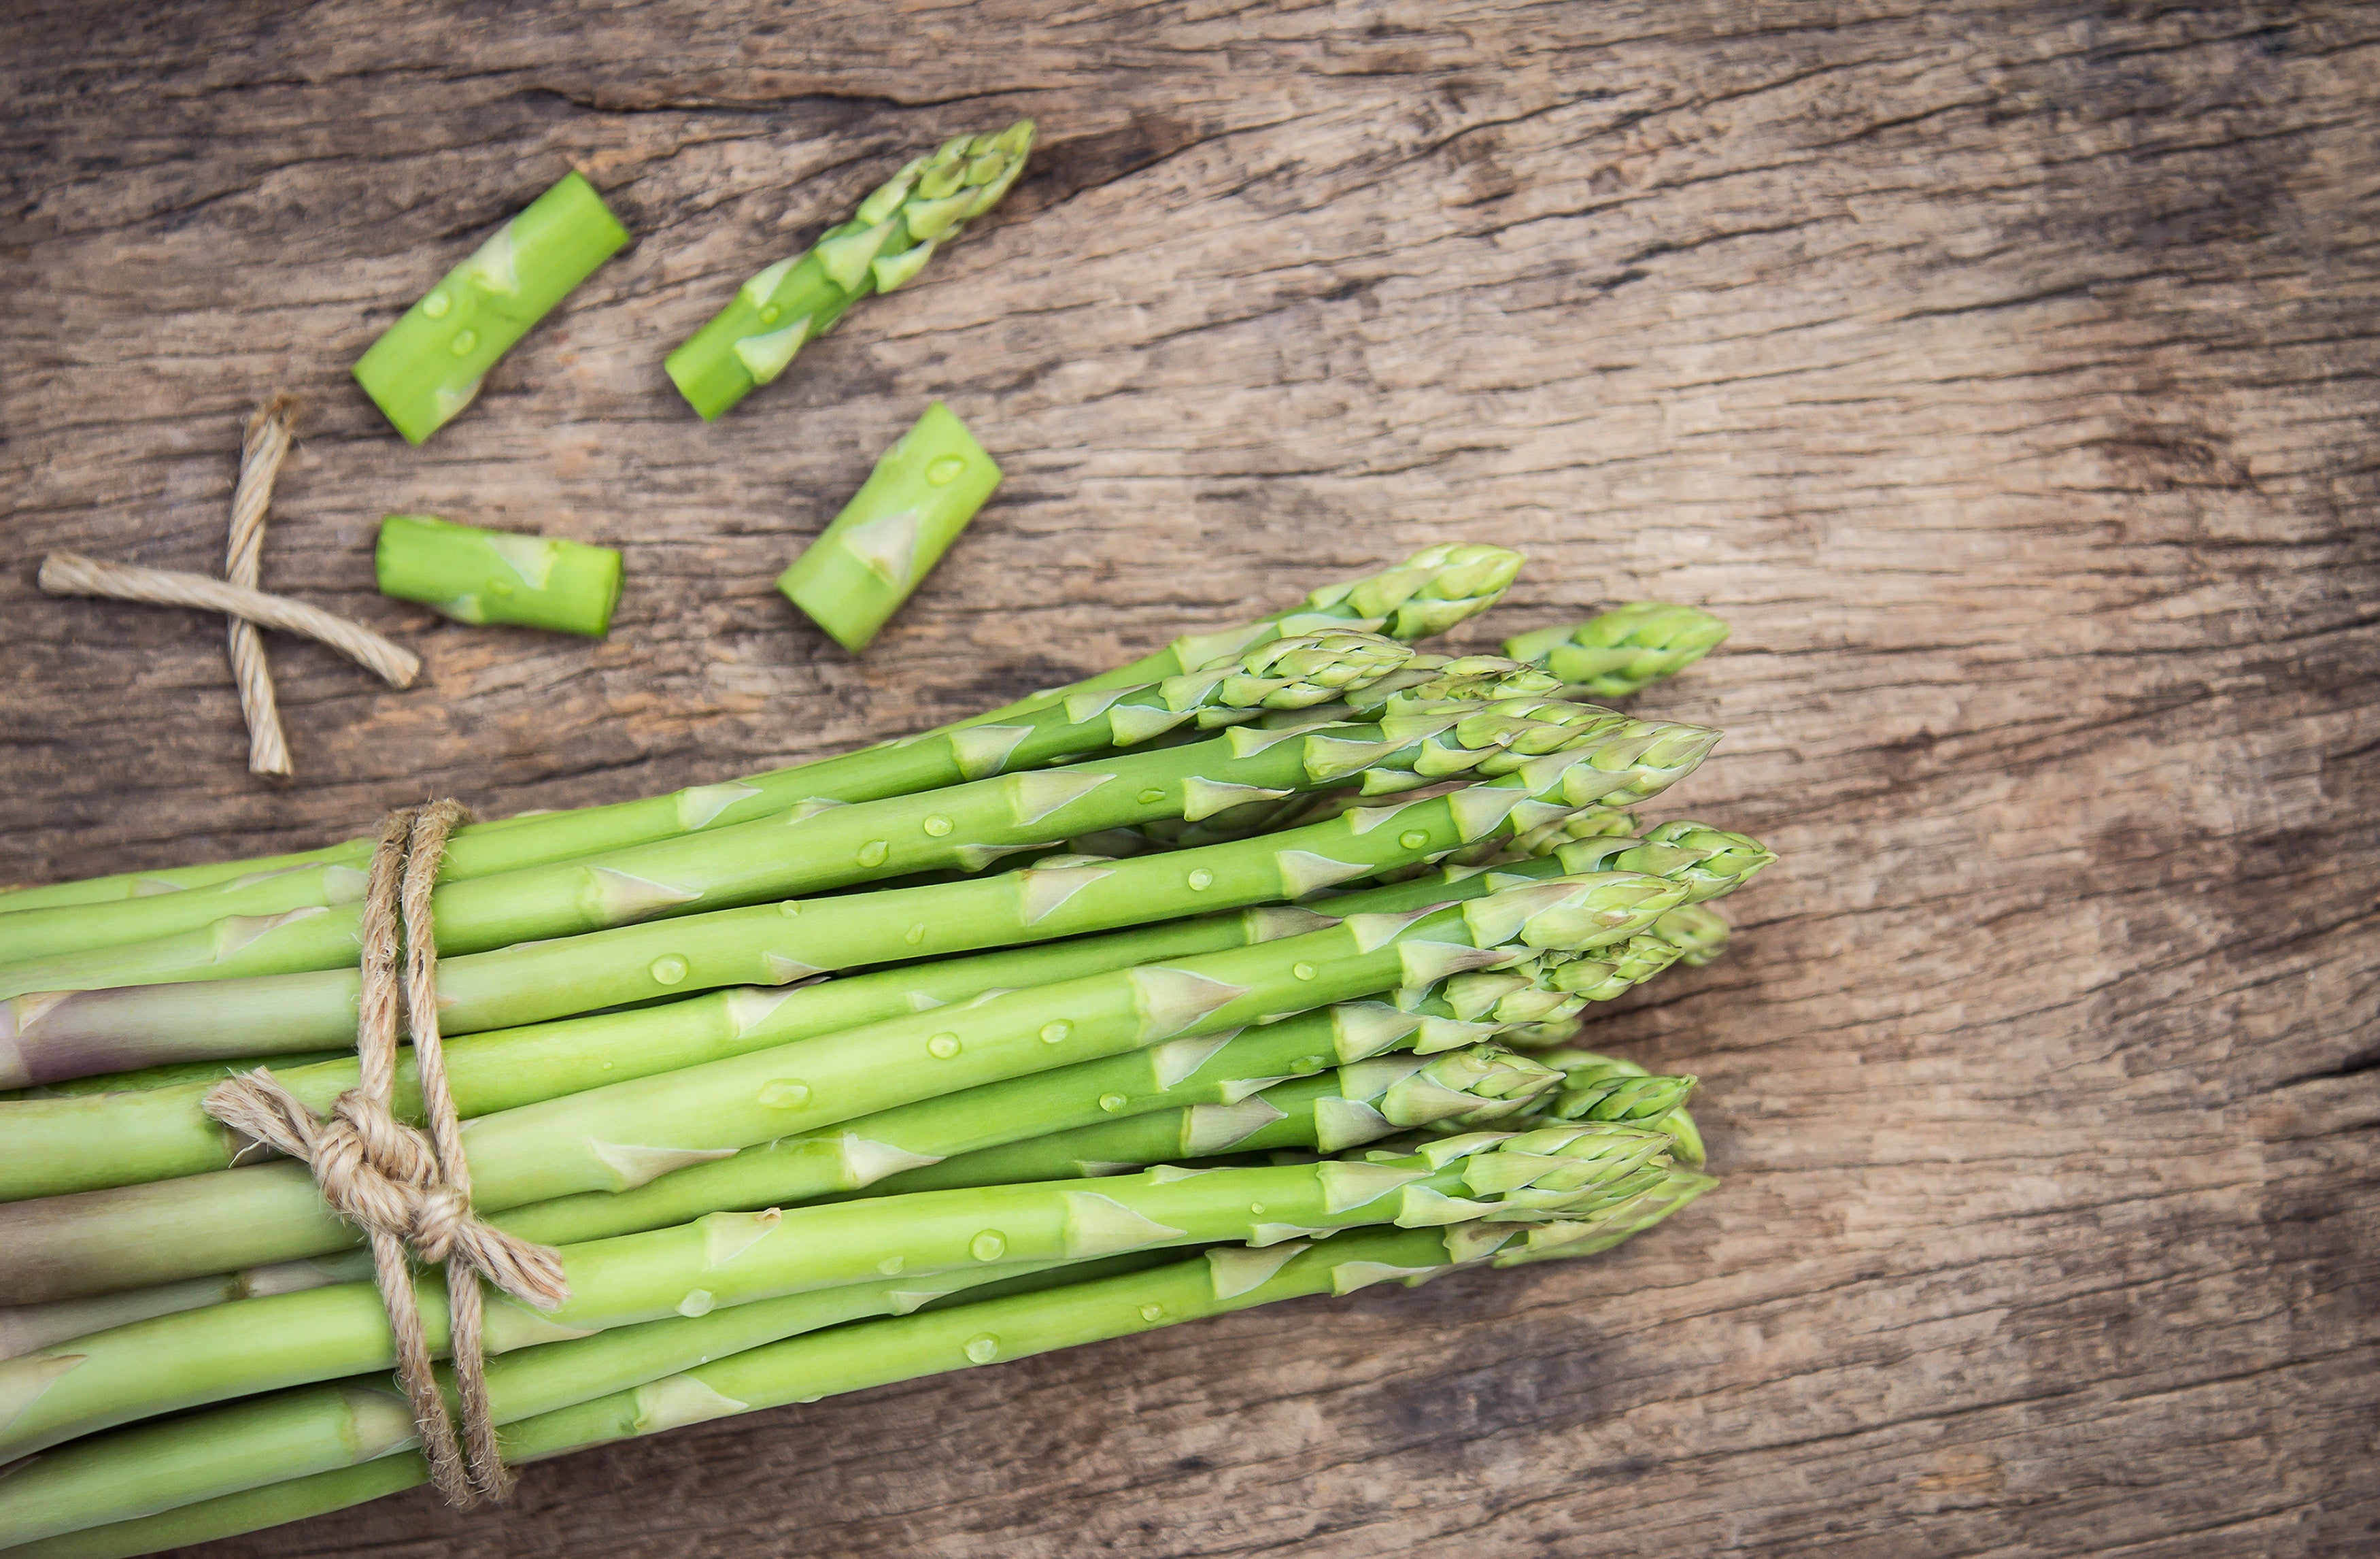 Organic asparagus for guinea pigs is better than regular asparagus